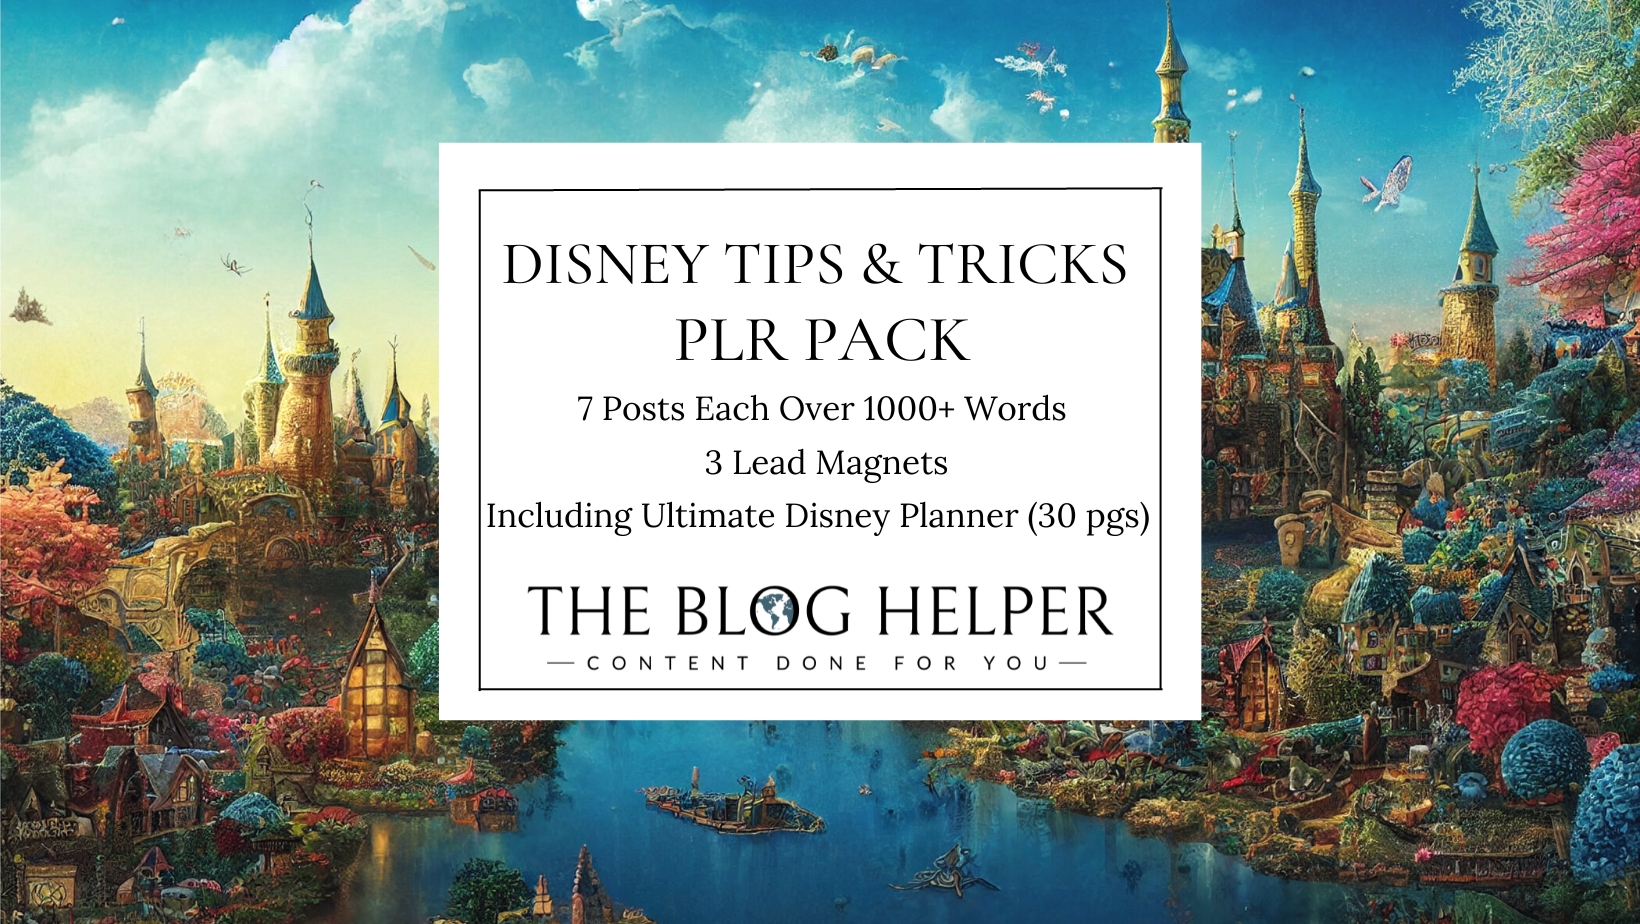 Disney Tips and Tricks PLR Pack